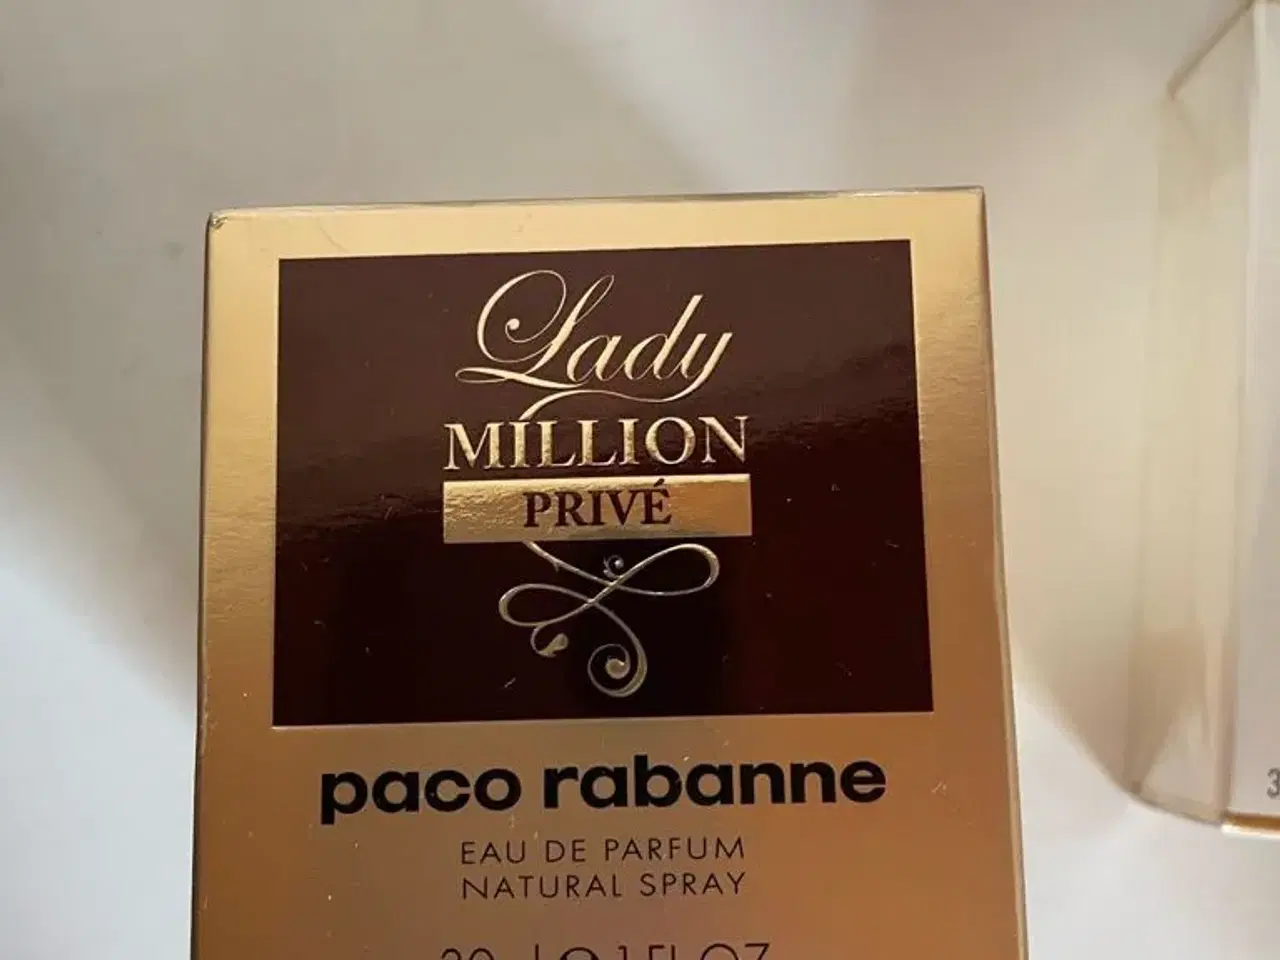 Billede 1 - Ny Ladymillion parfume